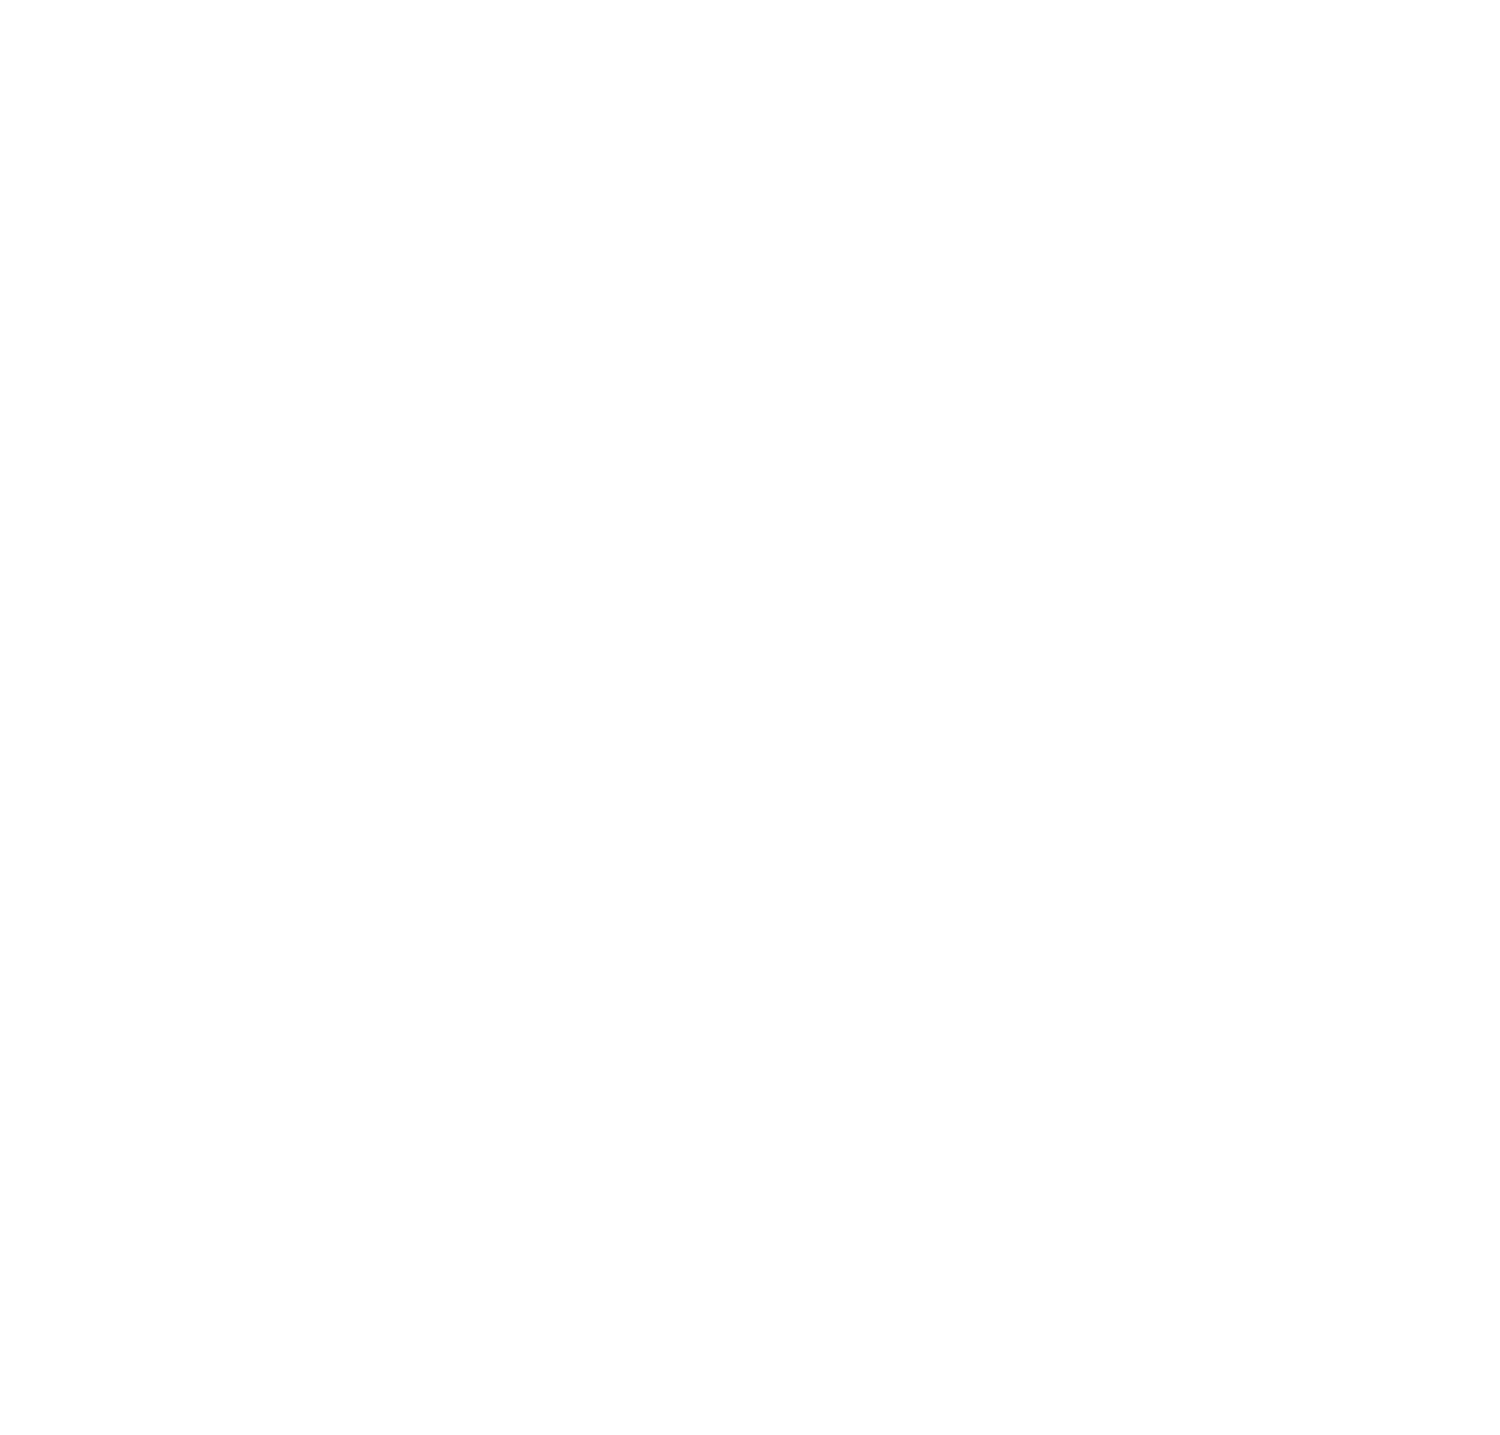 Global Footprints Scholarships